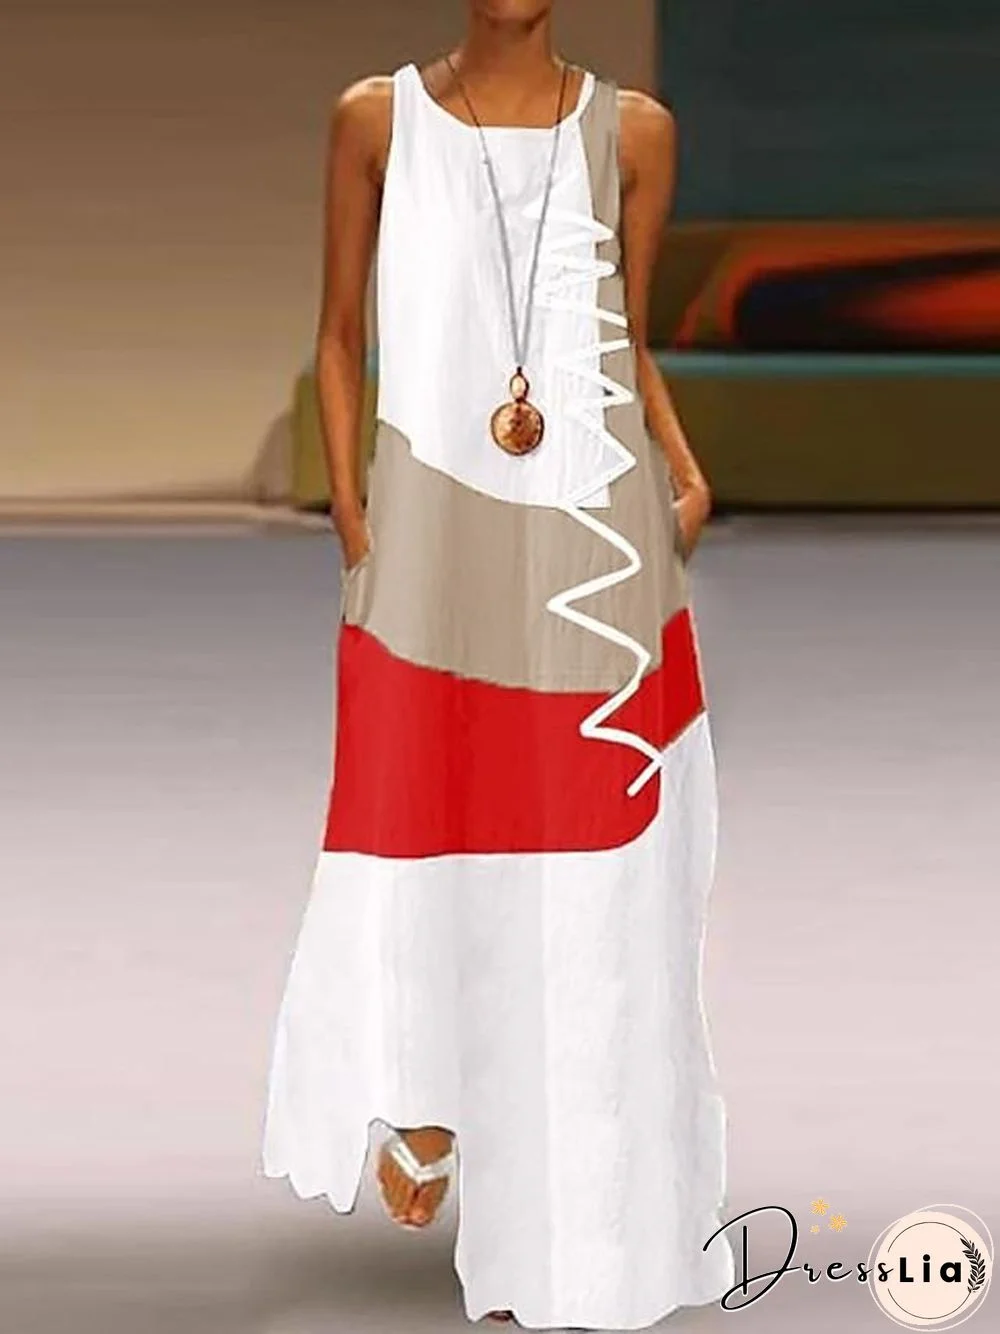 Women's A-Line Dress Maxi long Dress - Sleeveless Color Block Patchwork Summer Plus Size Casual Holiday Vacation White Red Khaki Dusty Blue S M L XL XXL XXXL XXXXL XXXXXL